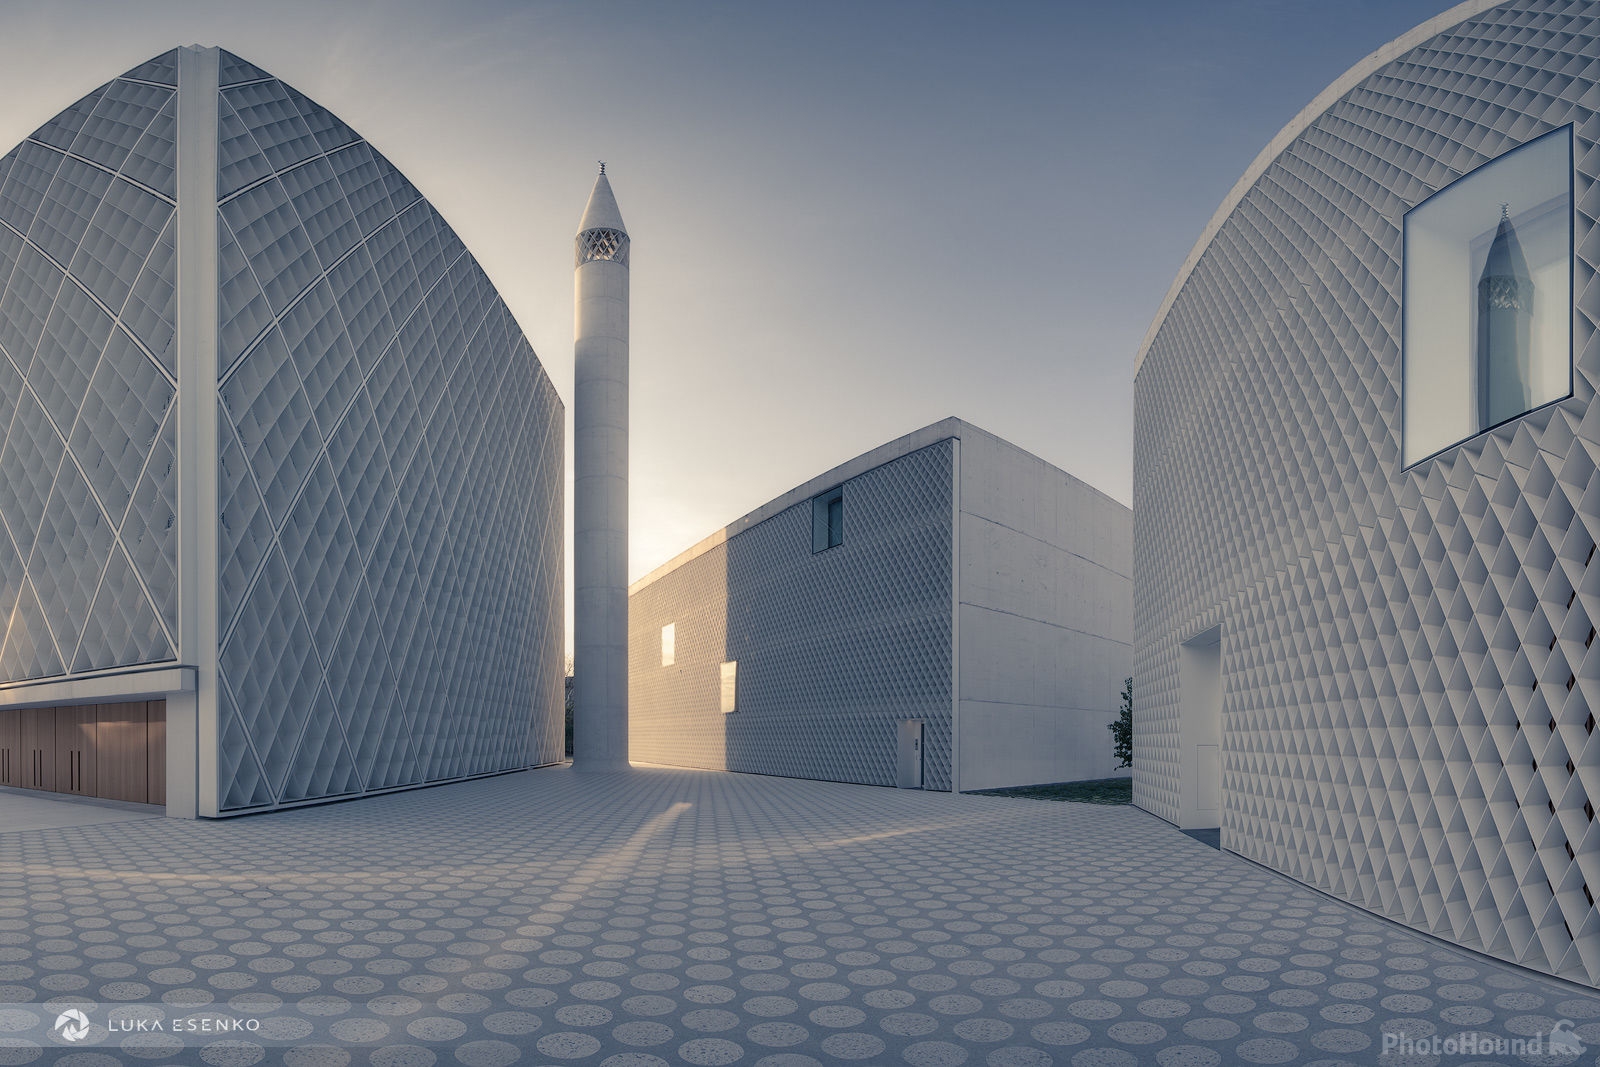 Image of Ljubljana Mosque by Luka Esenko